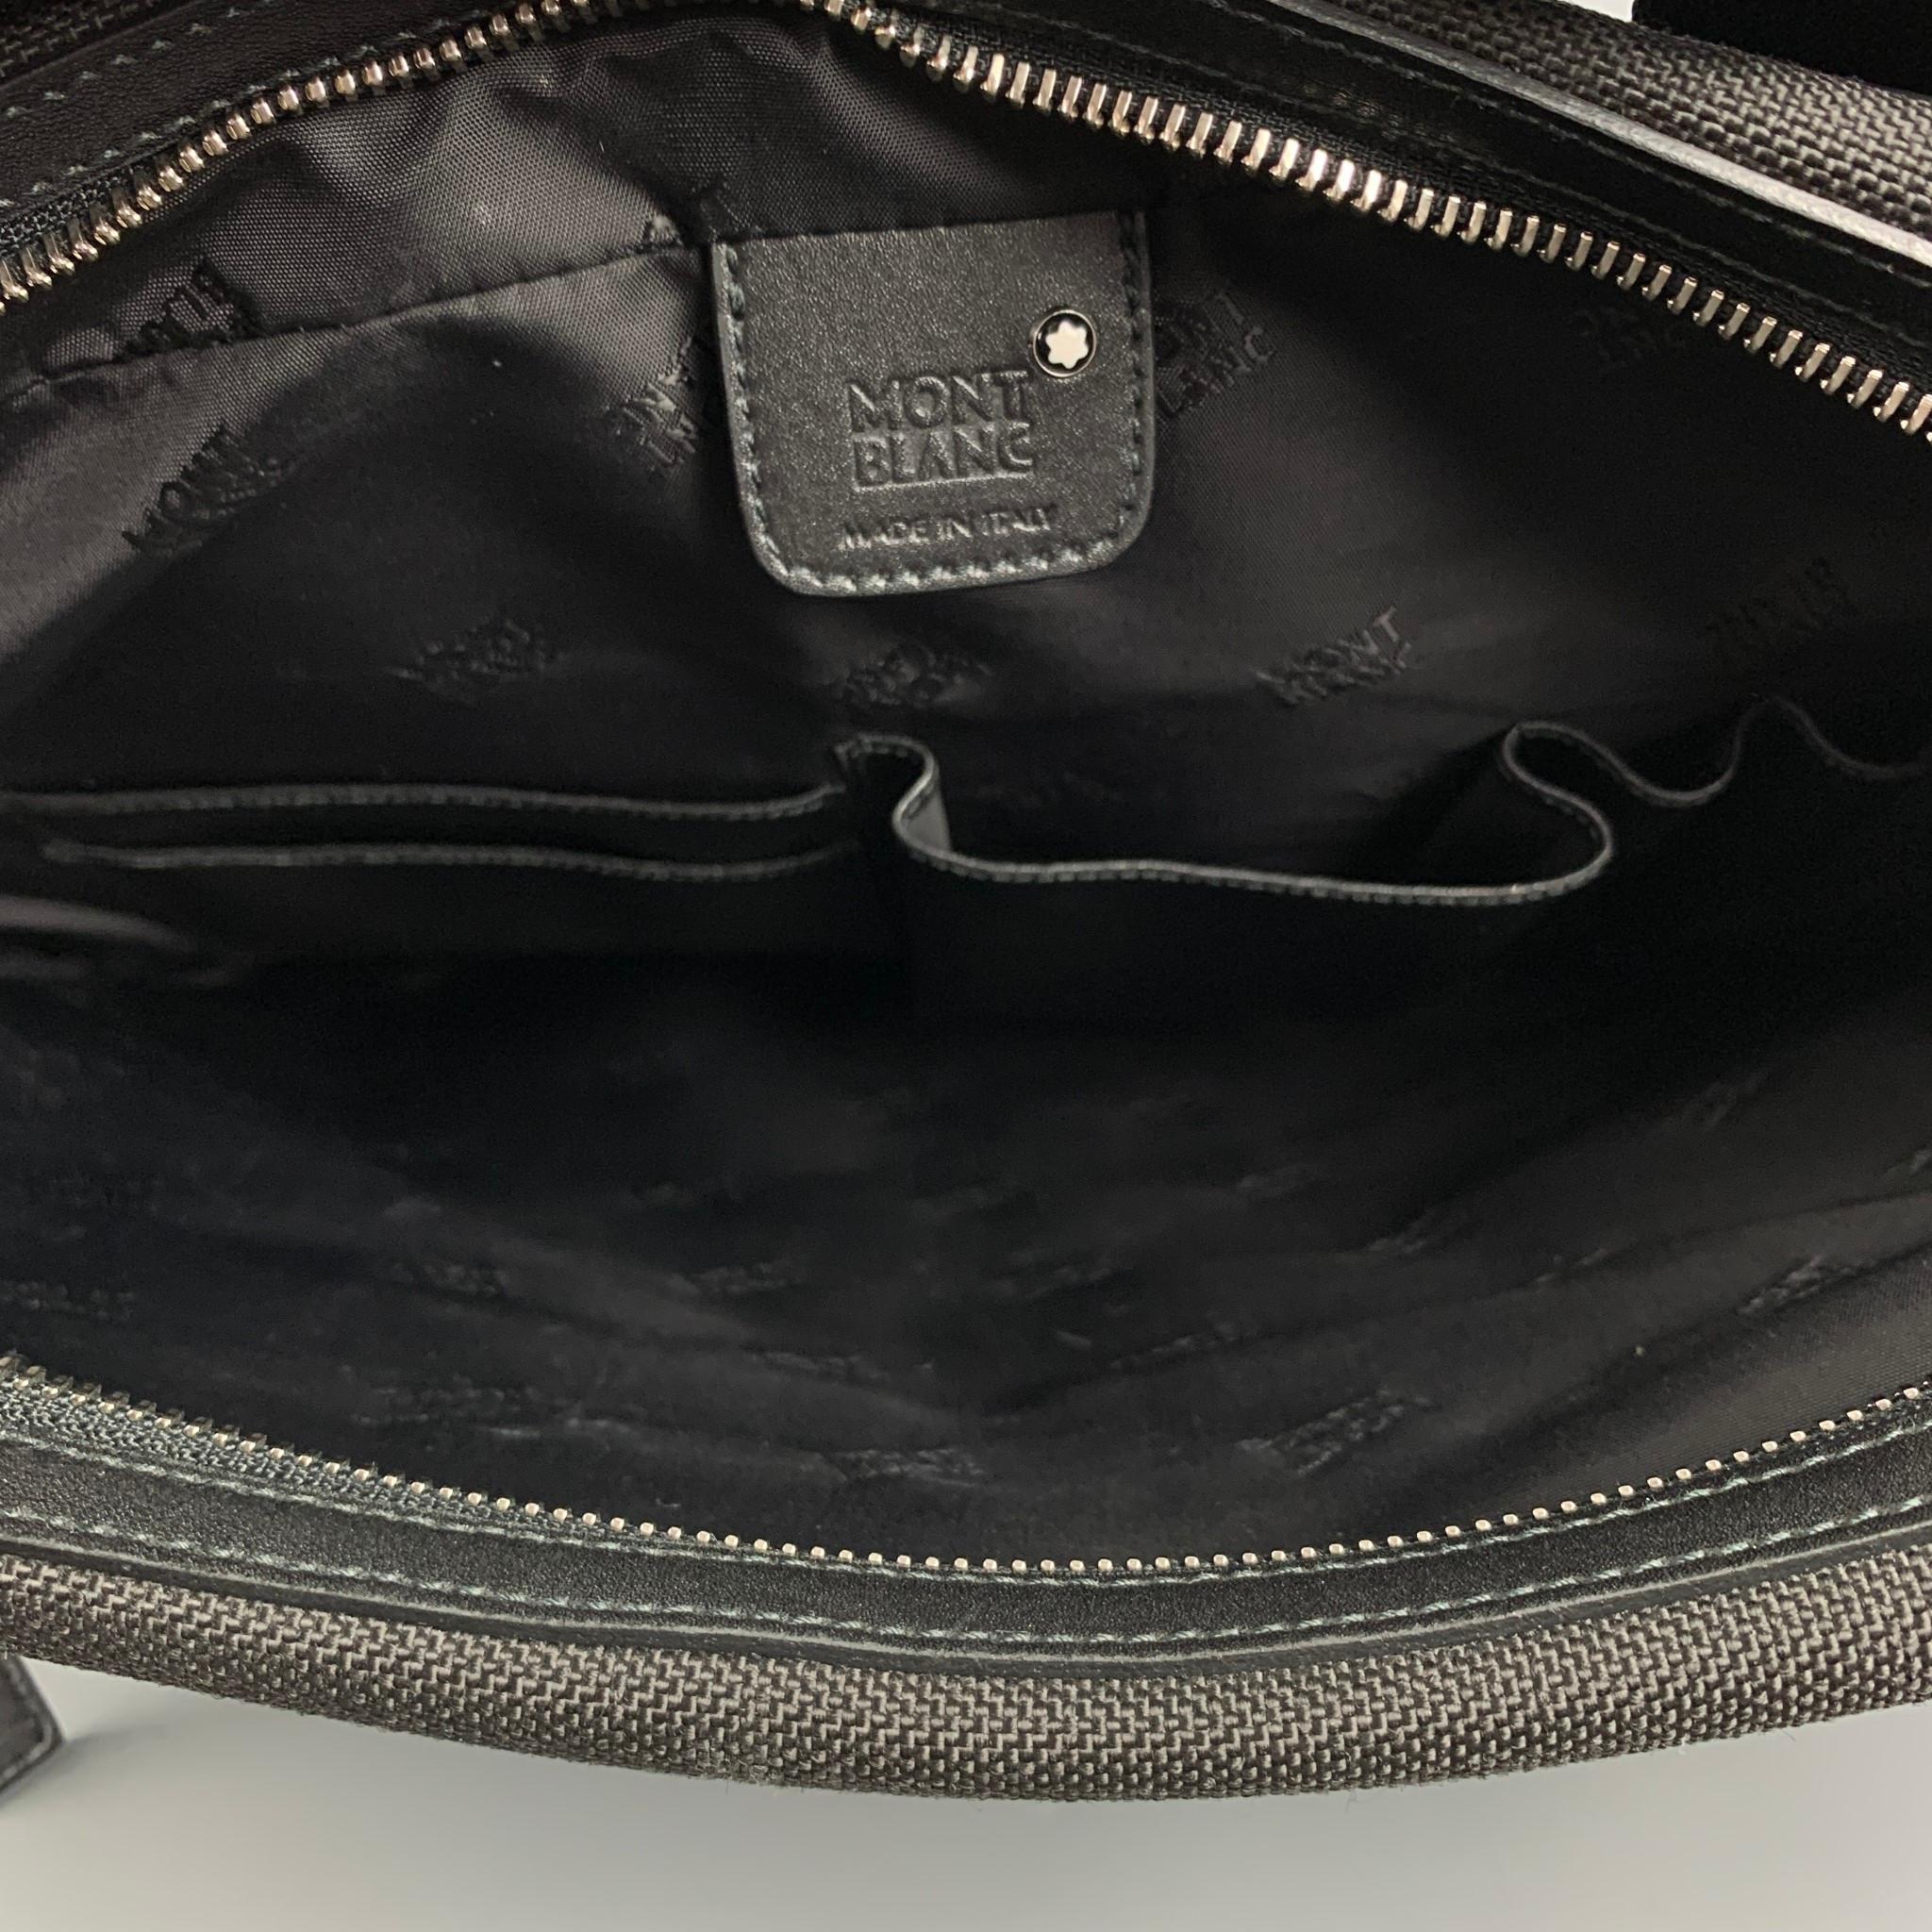 Men's MONT BLANC Black Mixed Materials Canvas Leather Briefcase